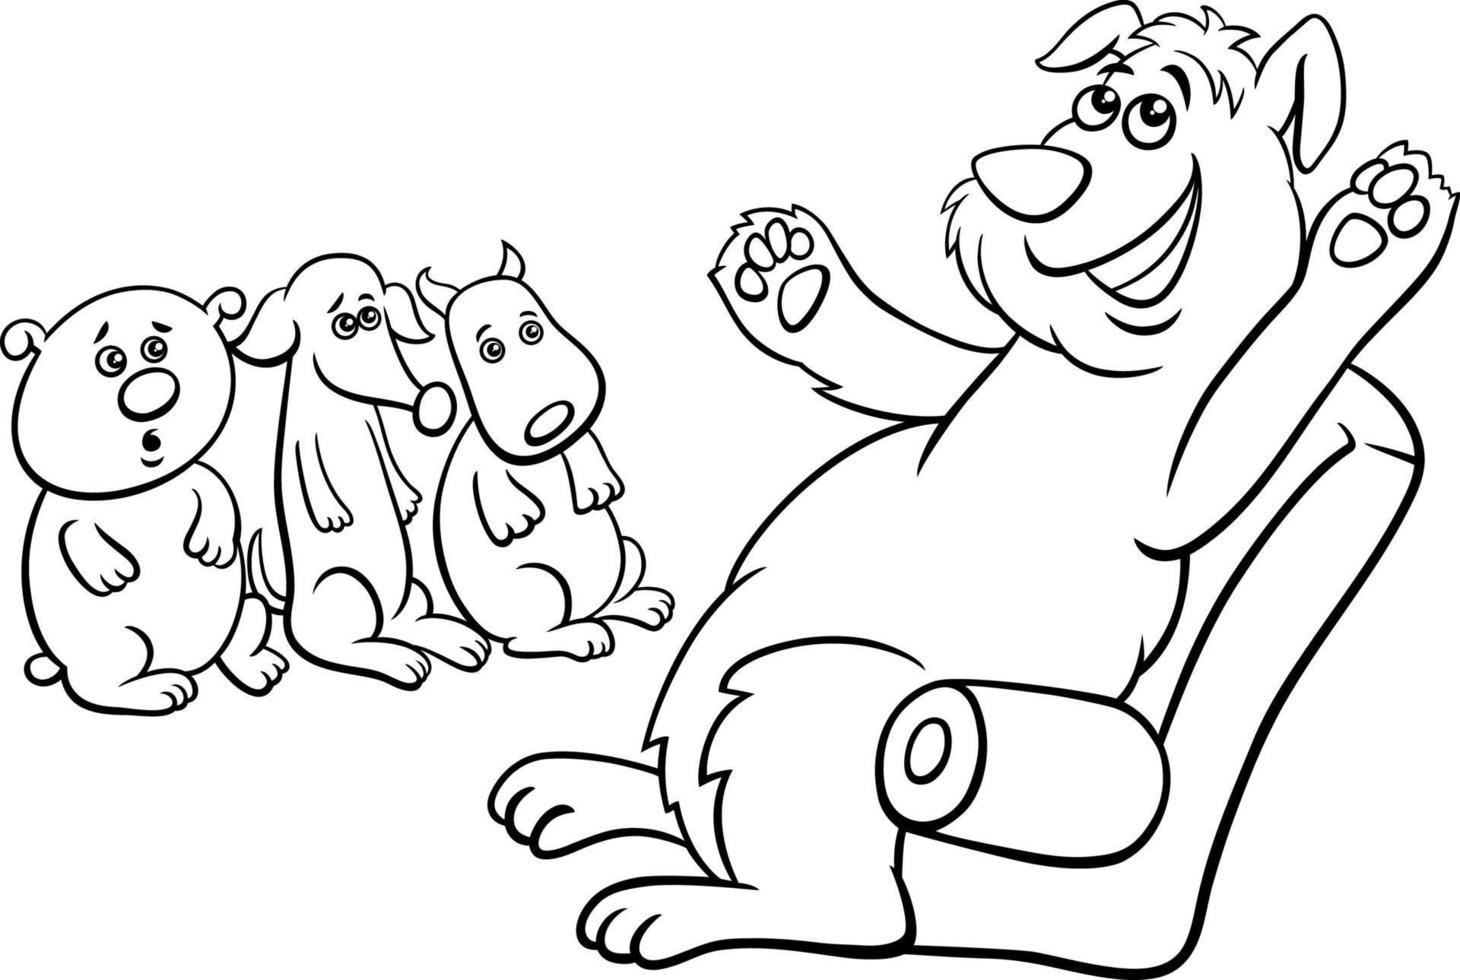 Perro de dibujos animados contando una historia a cachorros para colorear, pintar e imprimir vector